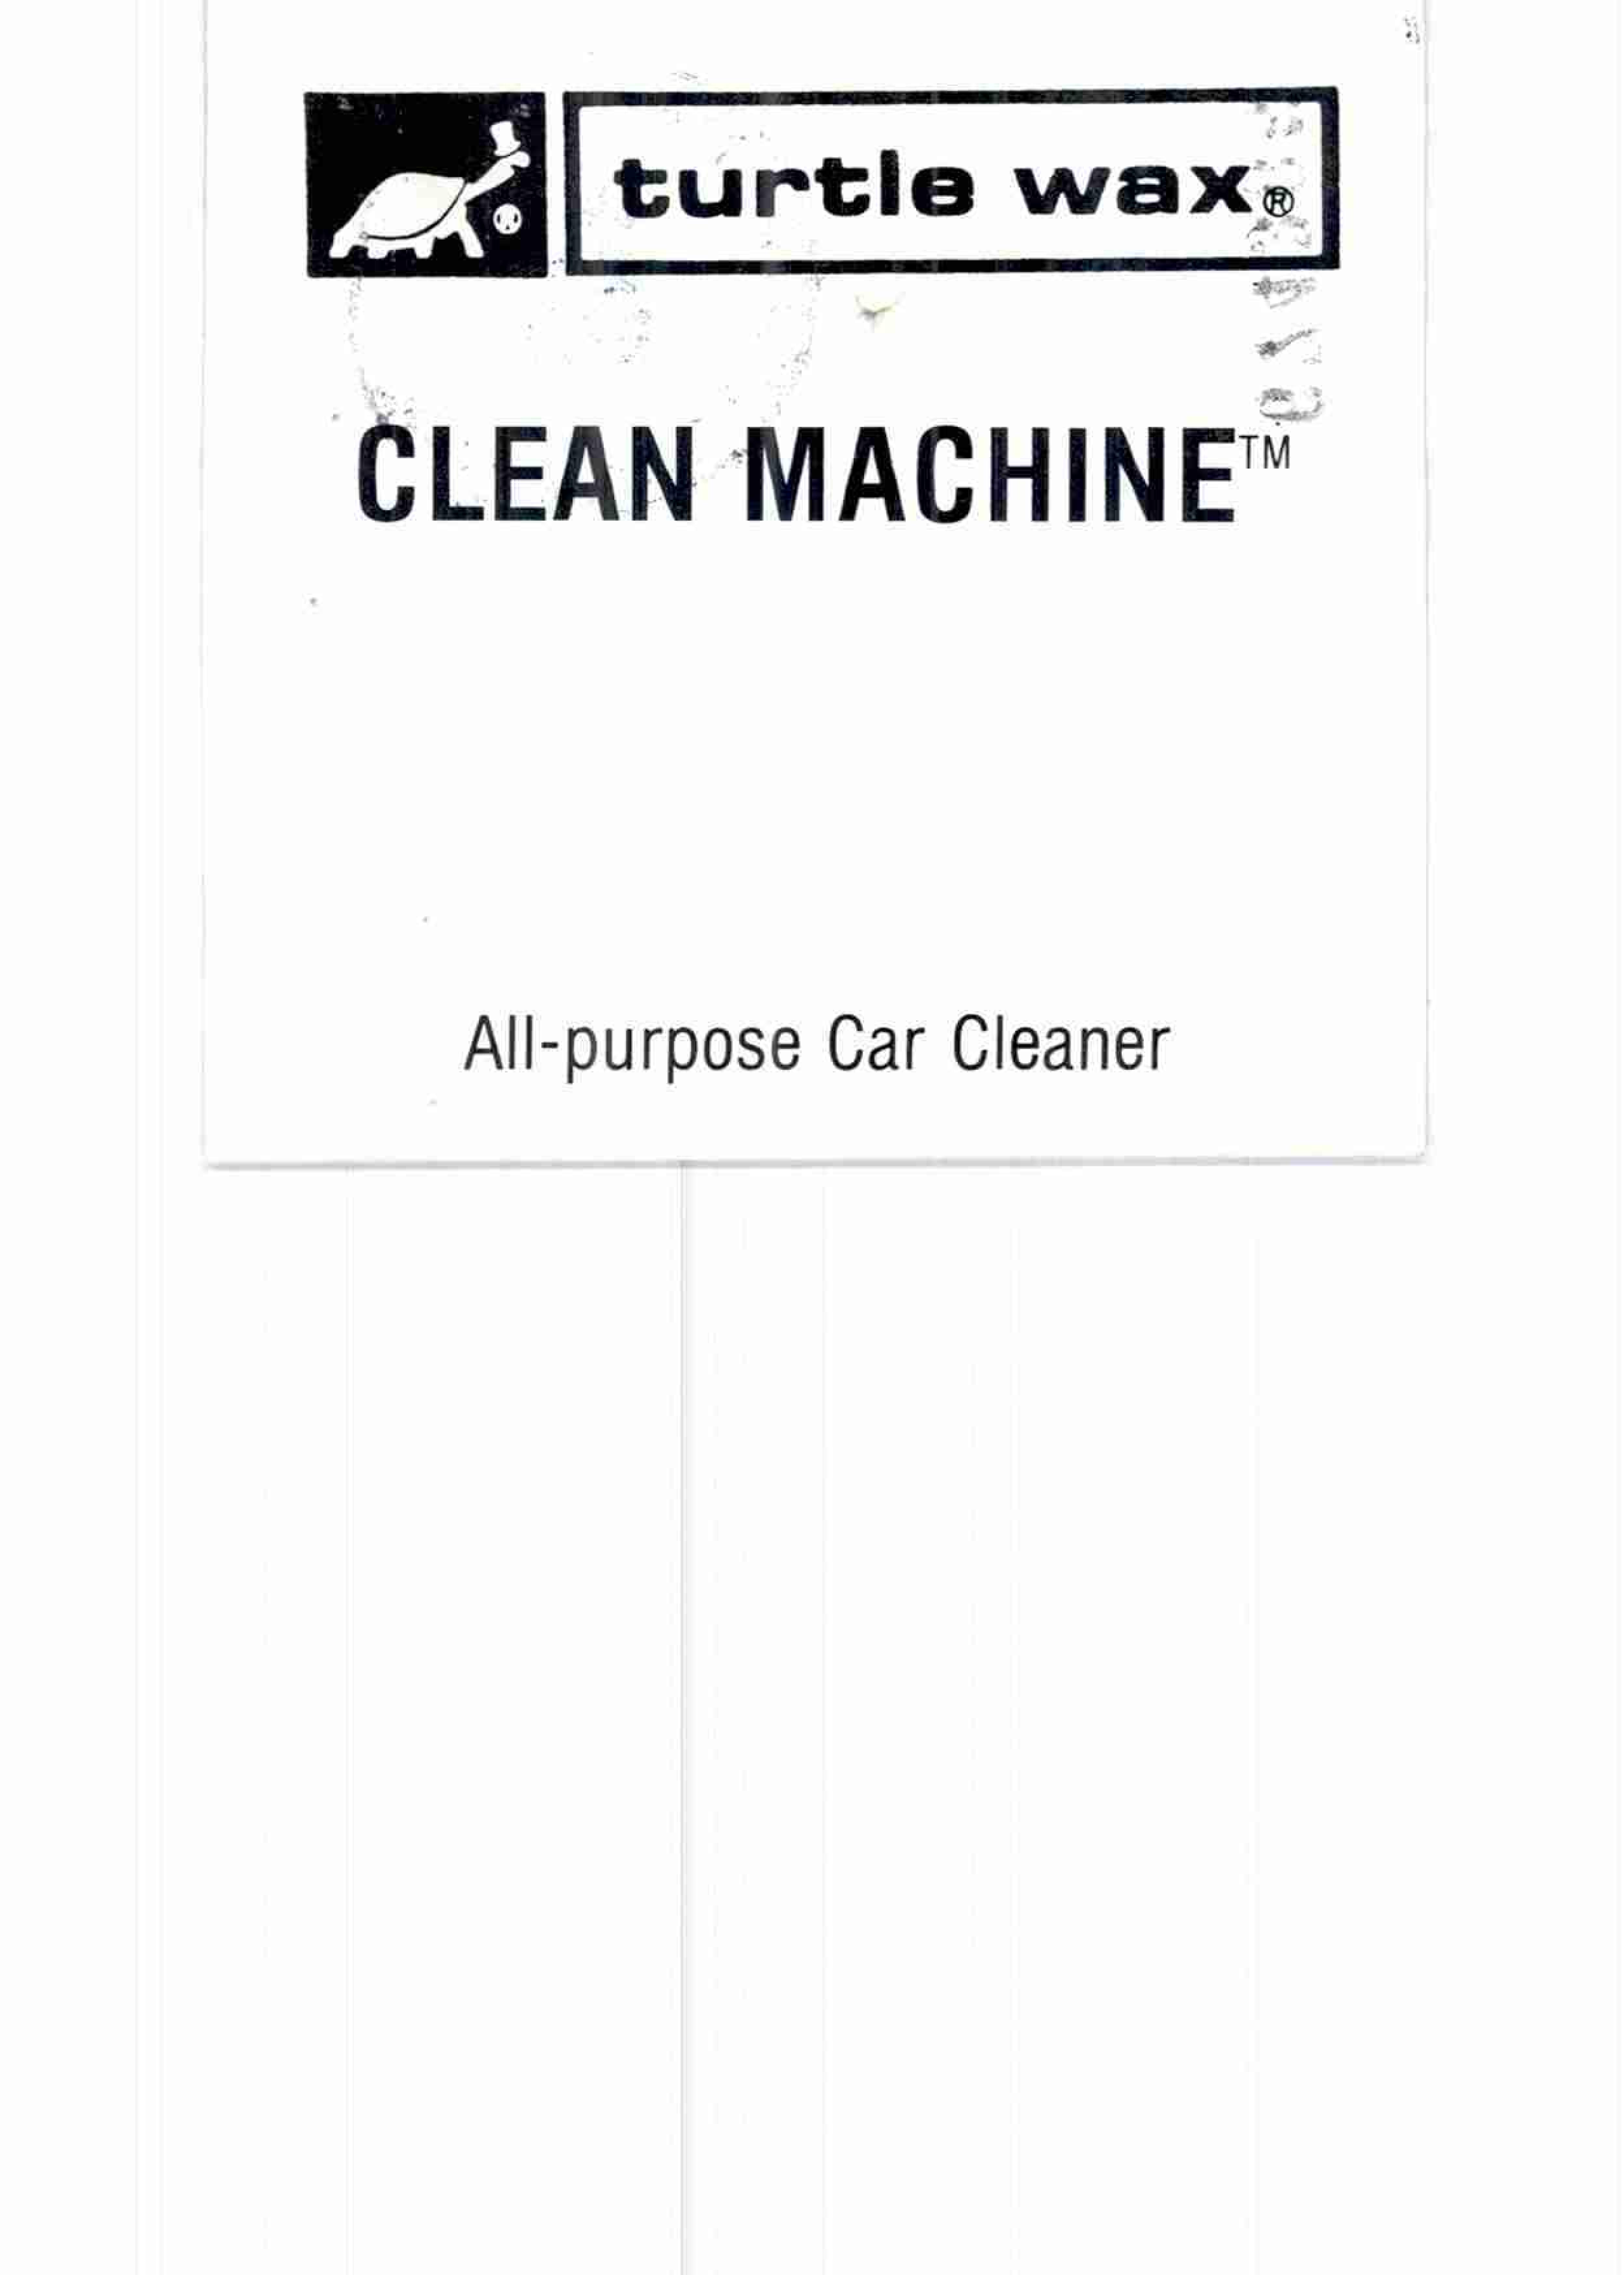 CLEAN MACHINE